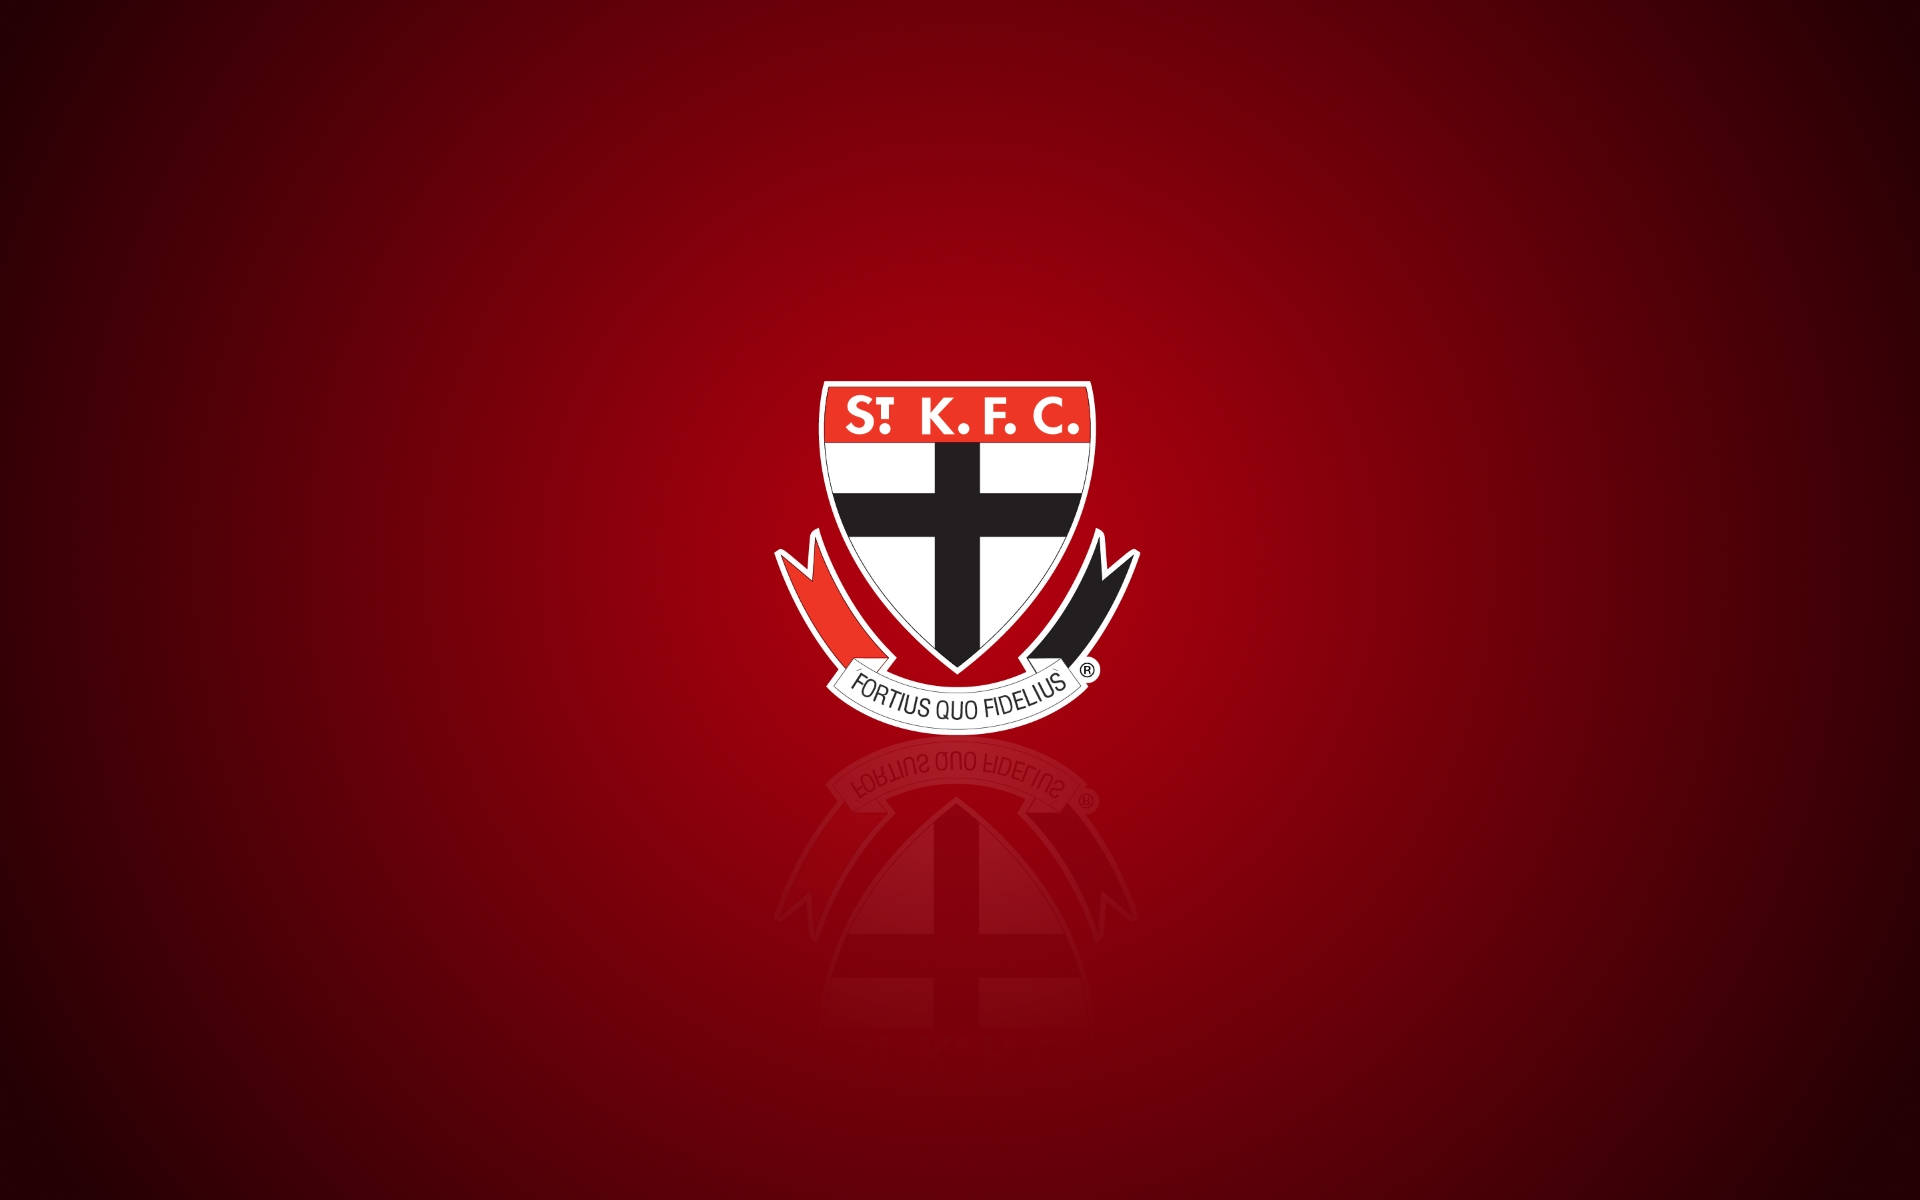 High-energy Afl Match - St Kilda Football Club